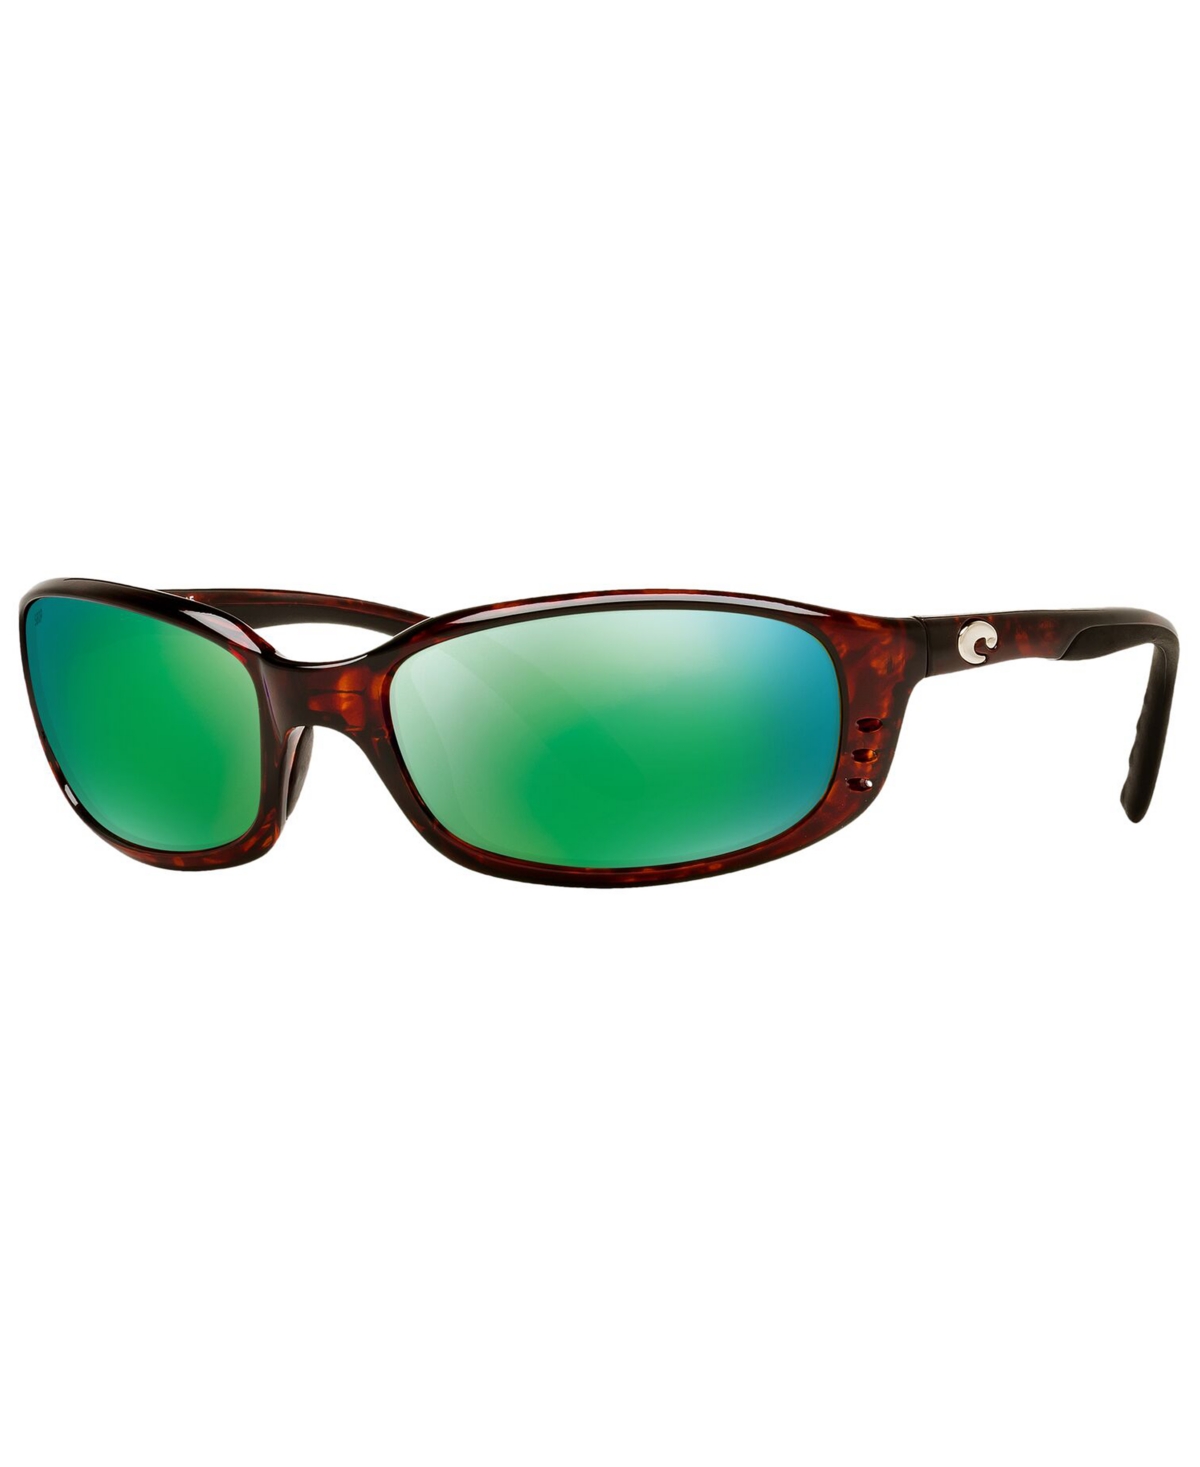 Costa Del Mar Polarized Sunglasses, Brine 06s000004 59p In Tortoise,green Mir Pol